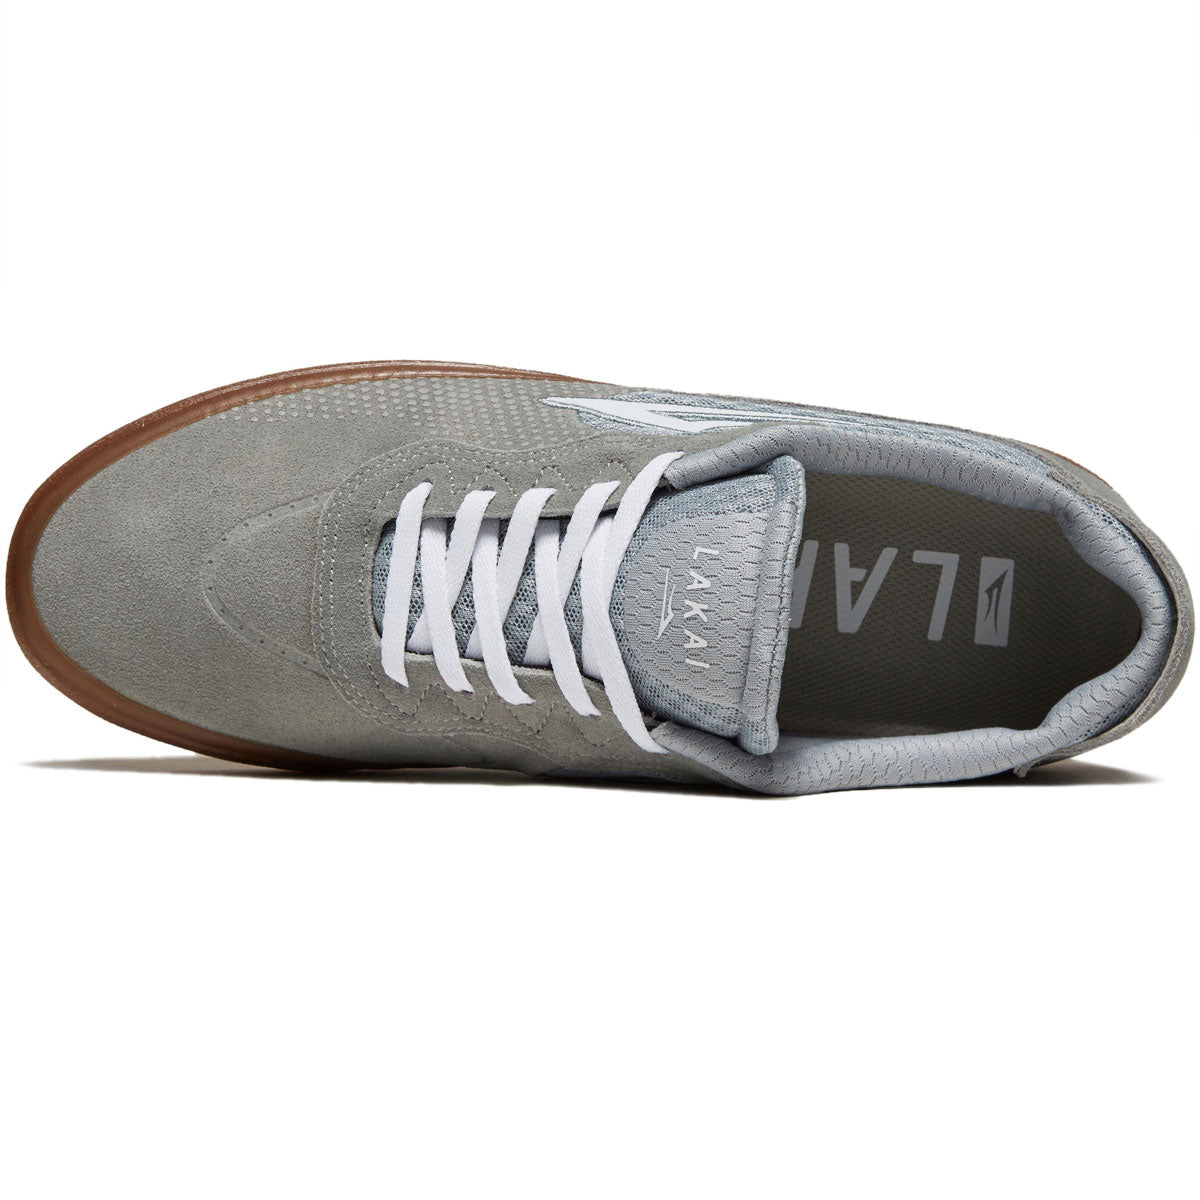 Lakai Essex Shoes - Light Grey/Gum Suede image 3